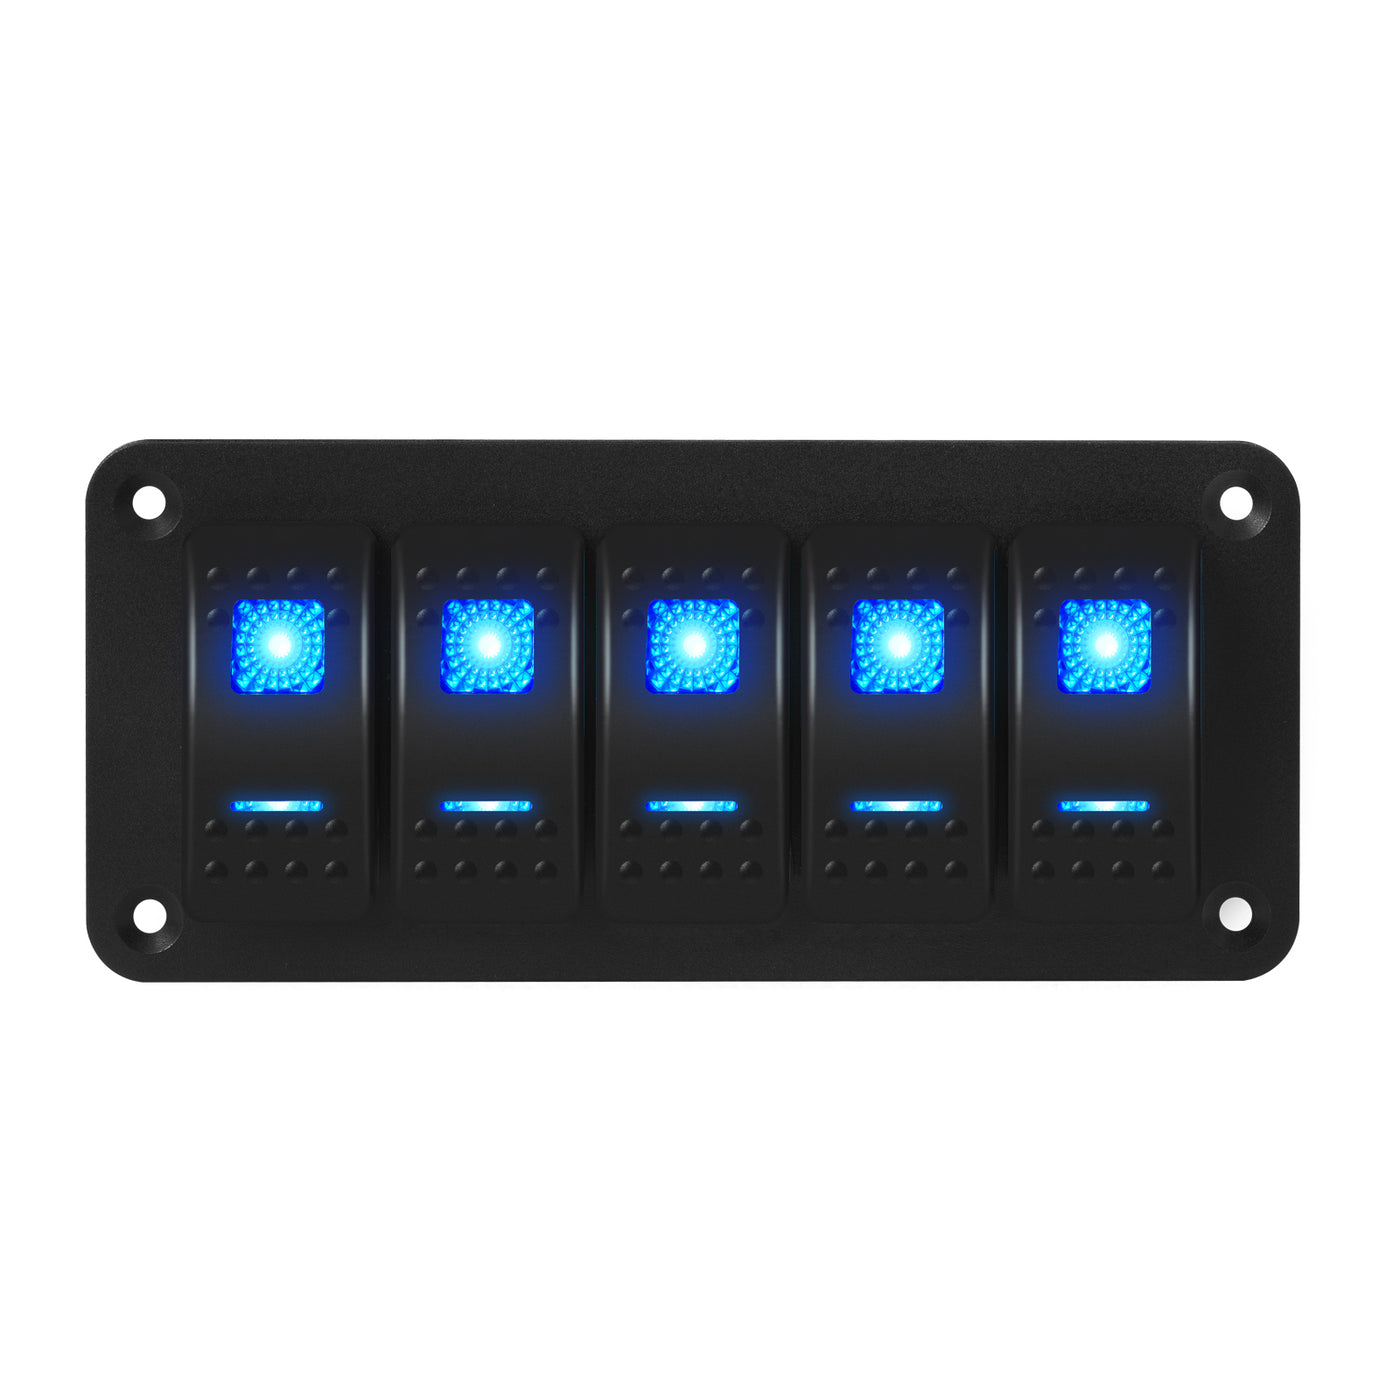 PN-1815 Dual LED 5 Gang Marine Rocker Switch Panel